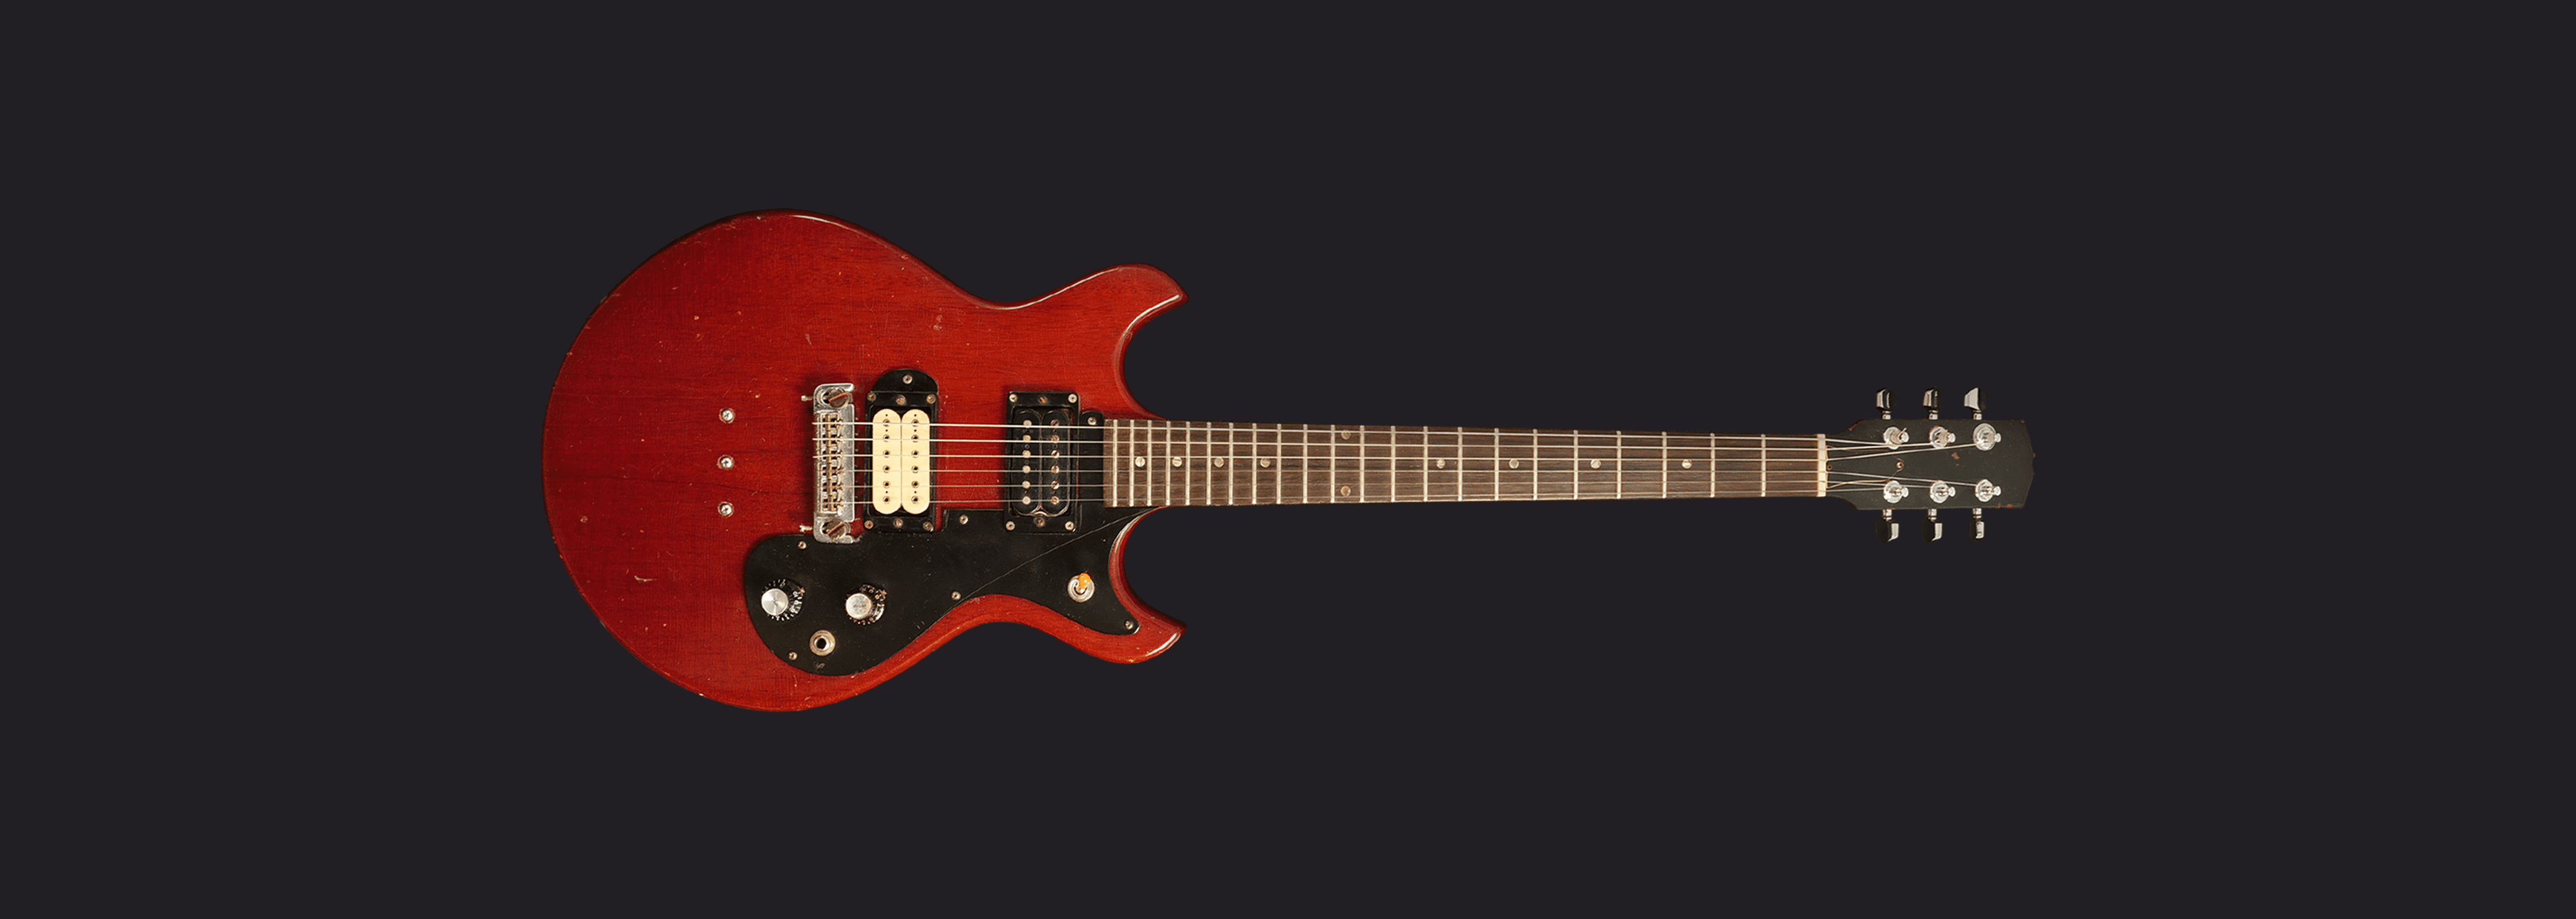 1965 Mello D Maker Guitar